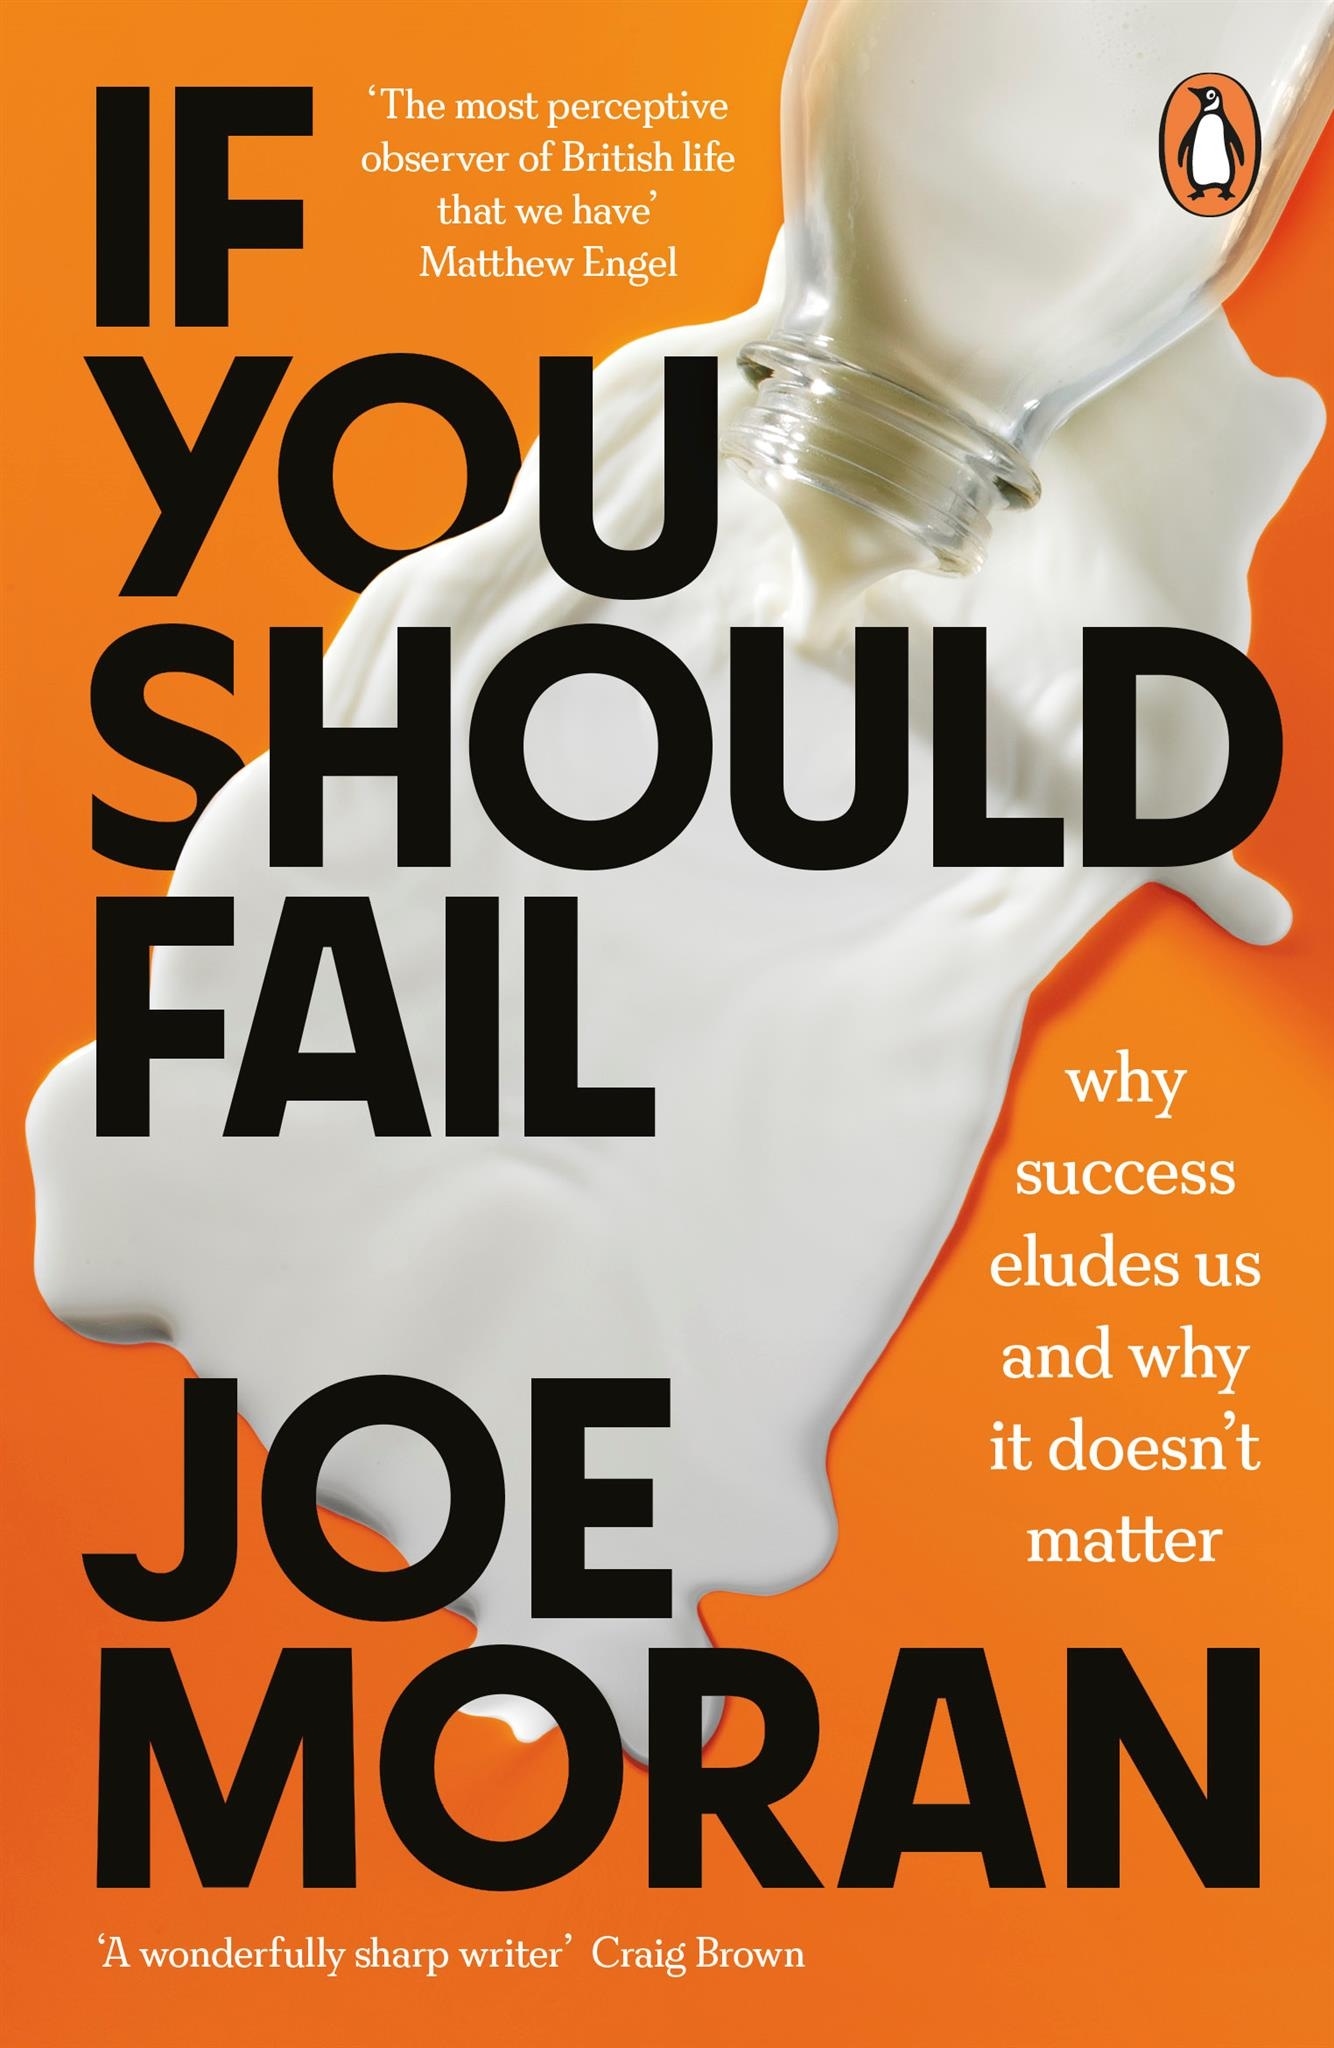 Book “If You Should Fail” by Joe Moran — August 5, 2021